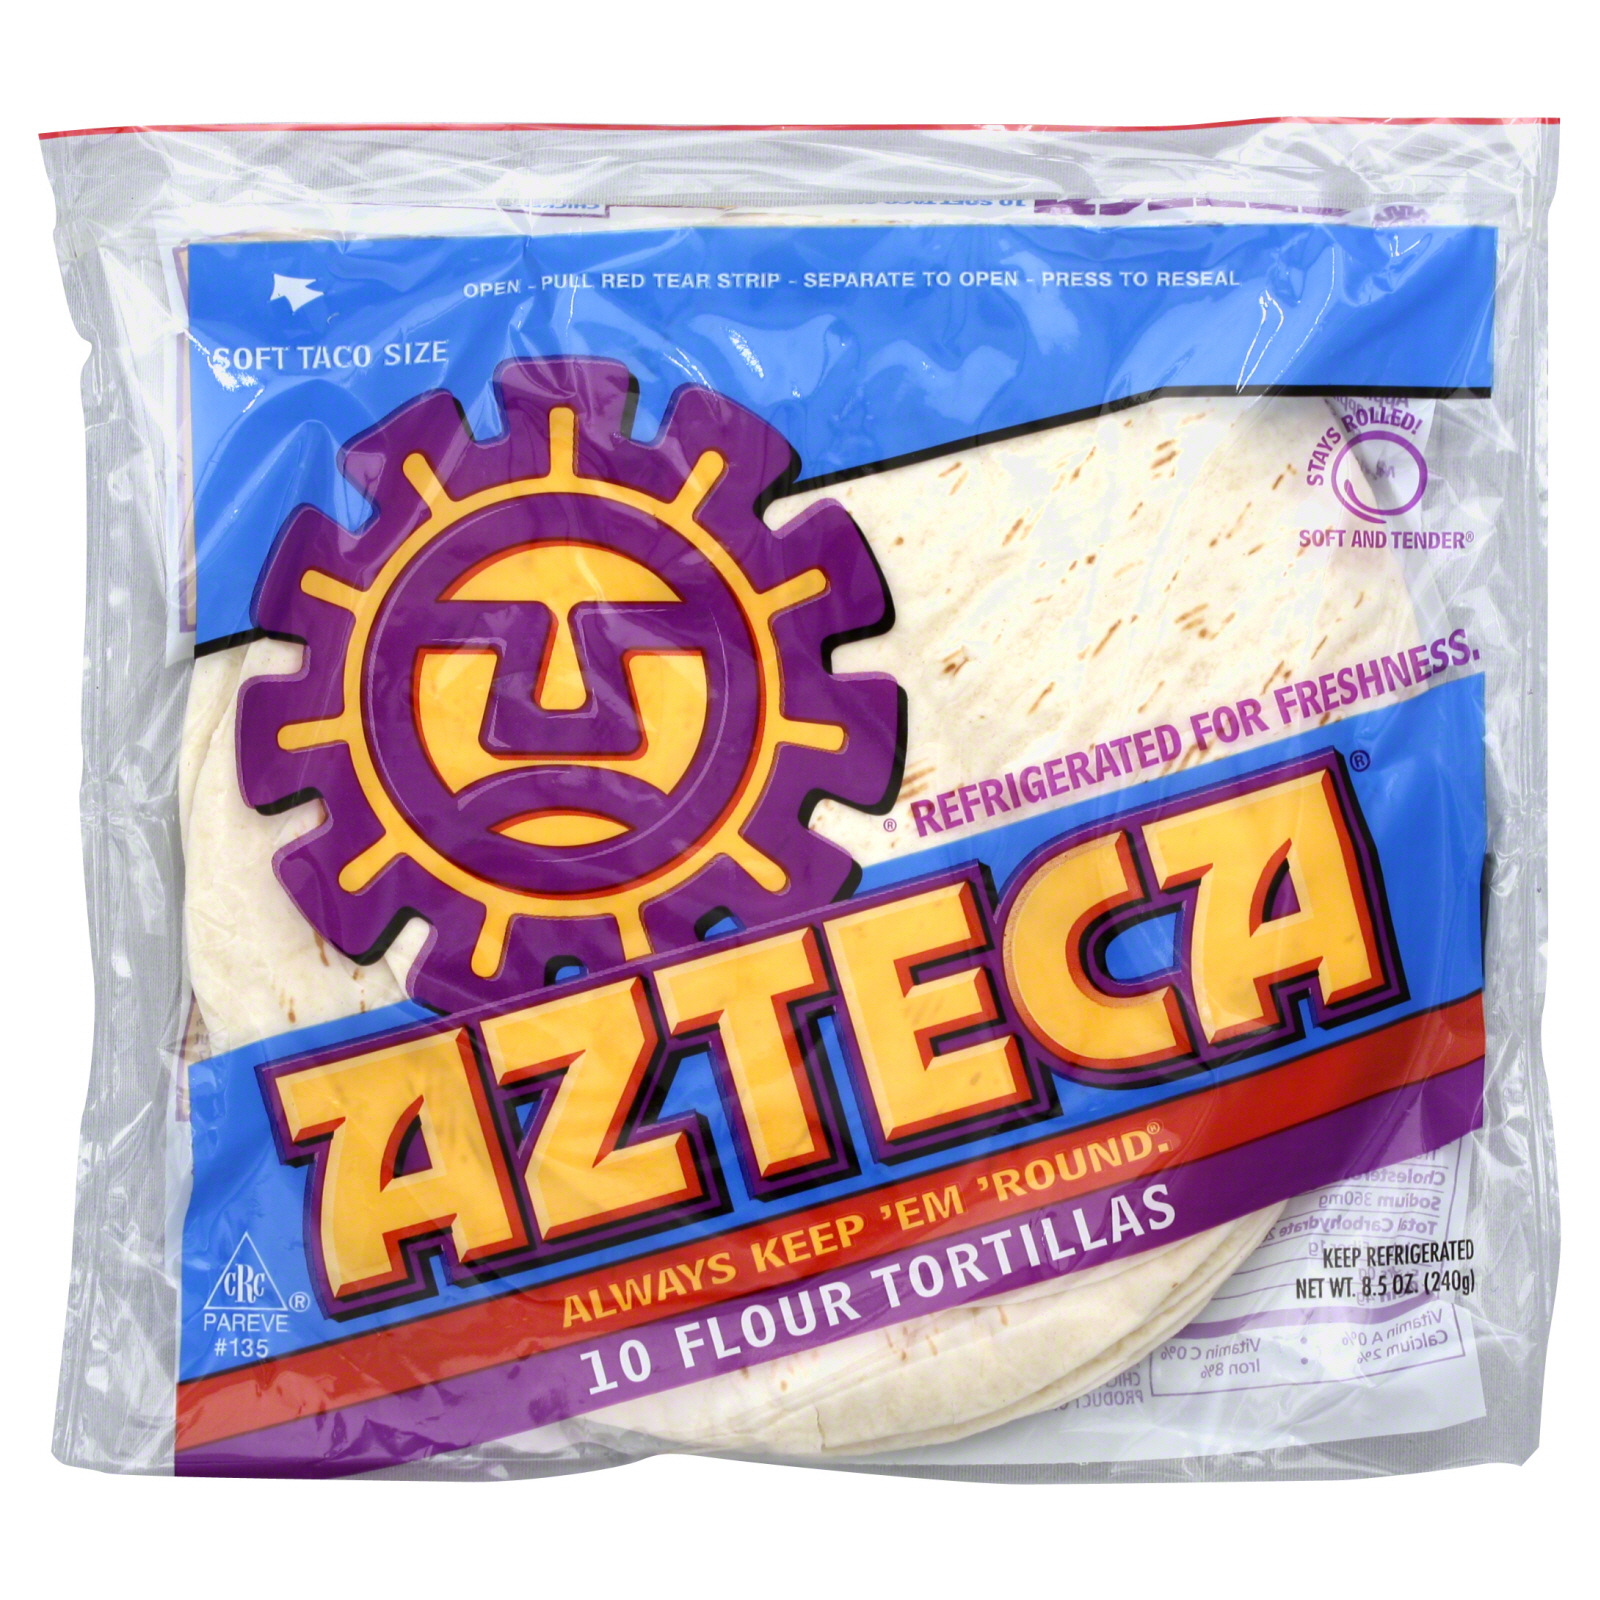 Azteca Tortillas, Flour, Soft Taco Size, 10 ea